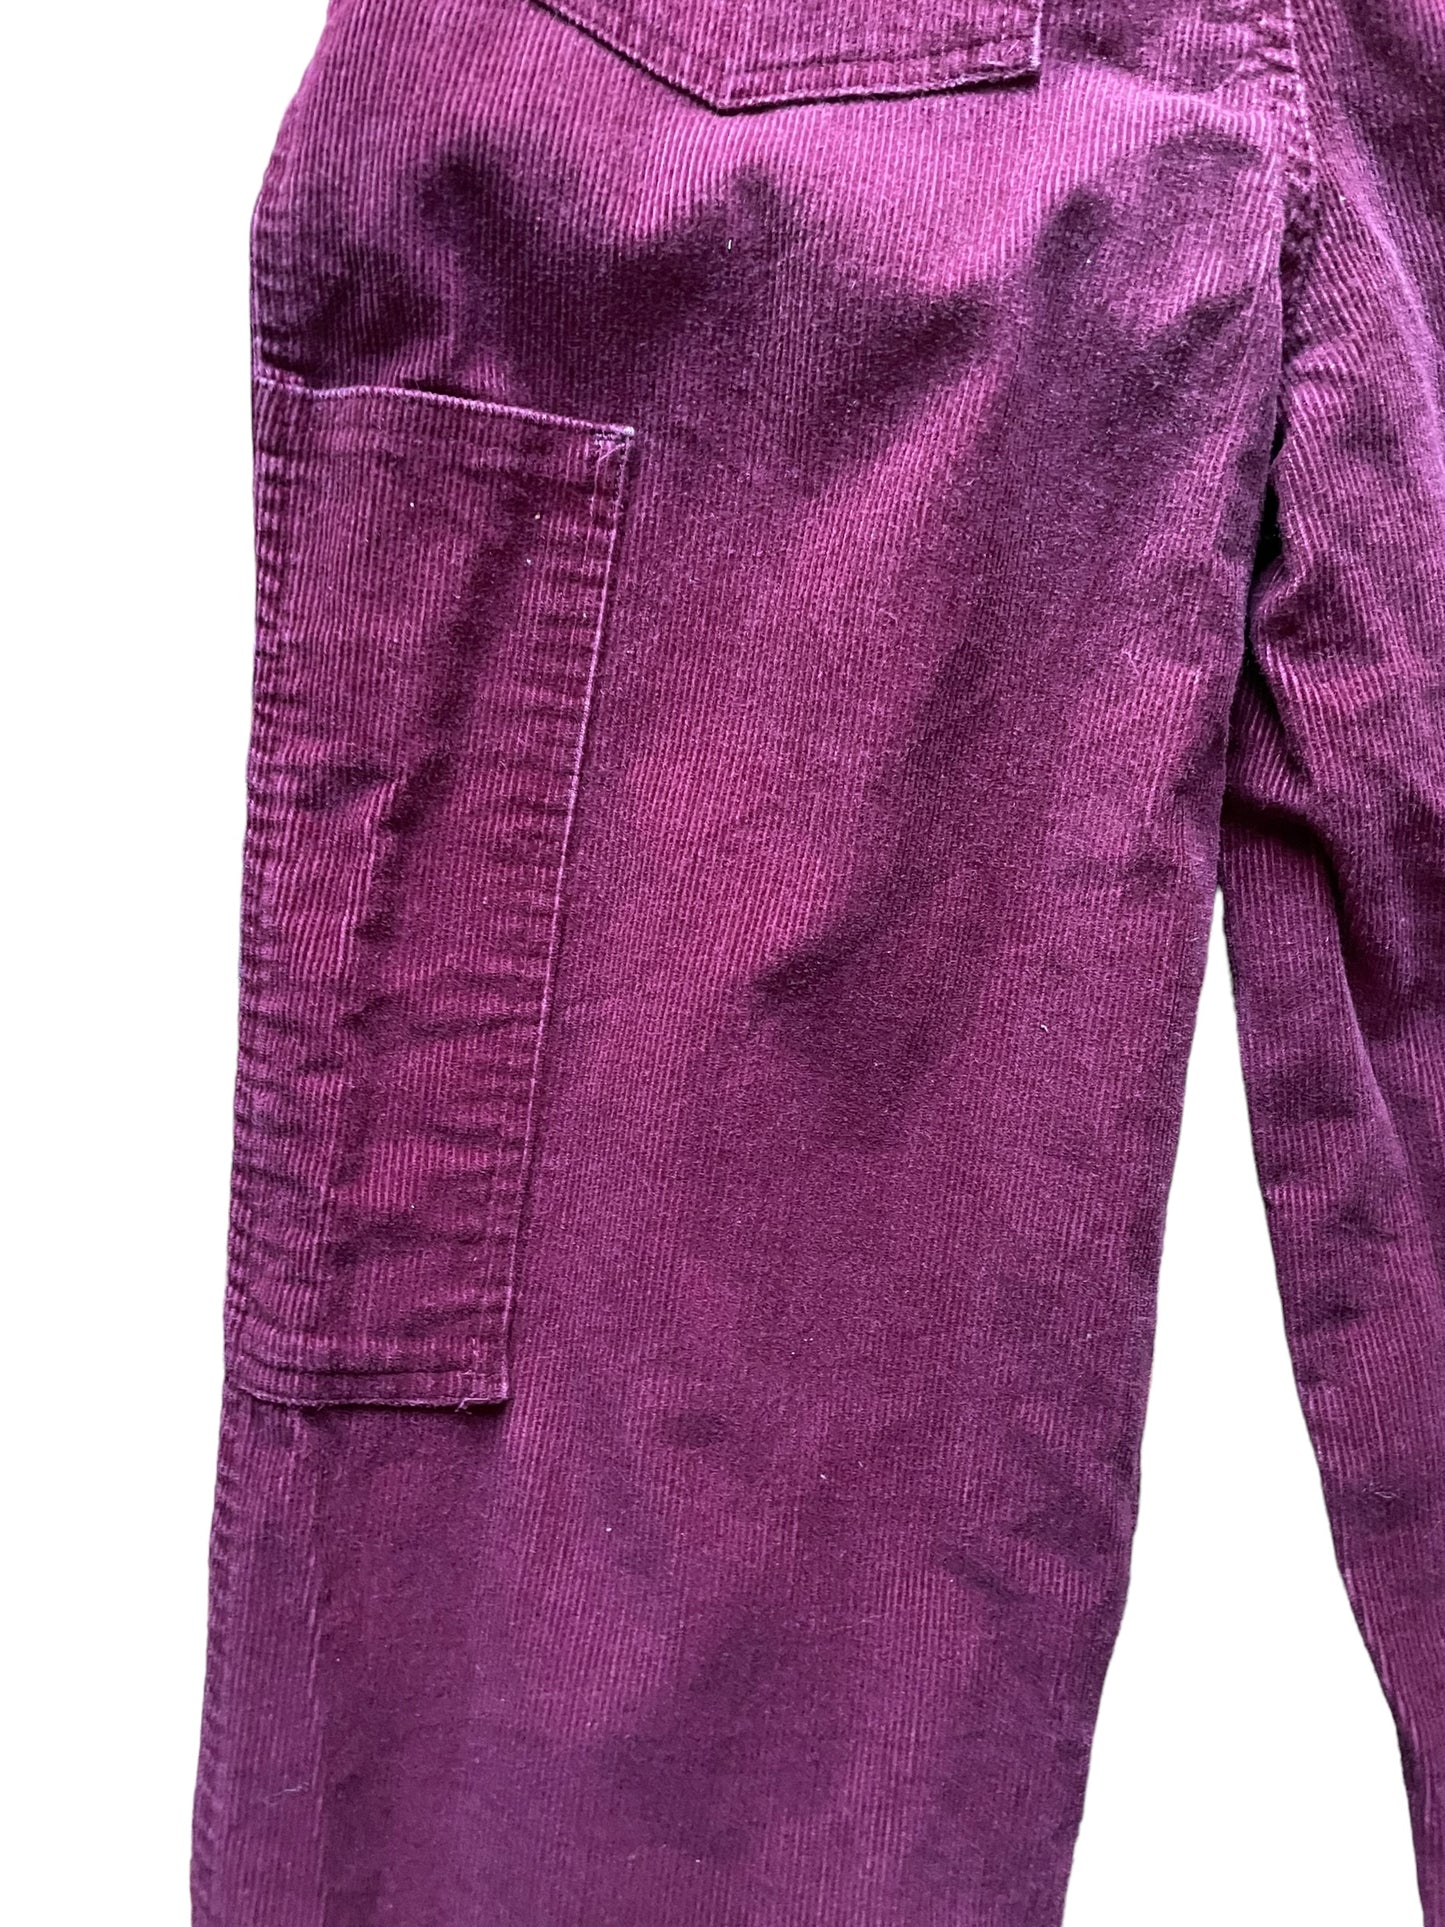 Utility pocket view of Vintage 1970s Calvin Klein Corduroy Pants W26 | Barn Owl Vintage Seattle | Vintage Corduroy Pants